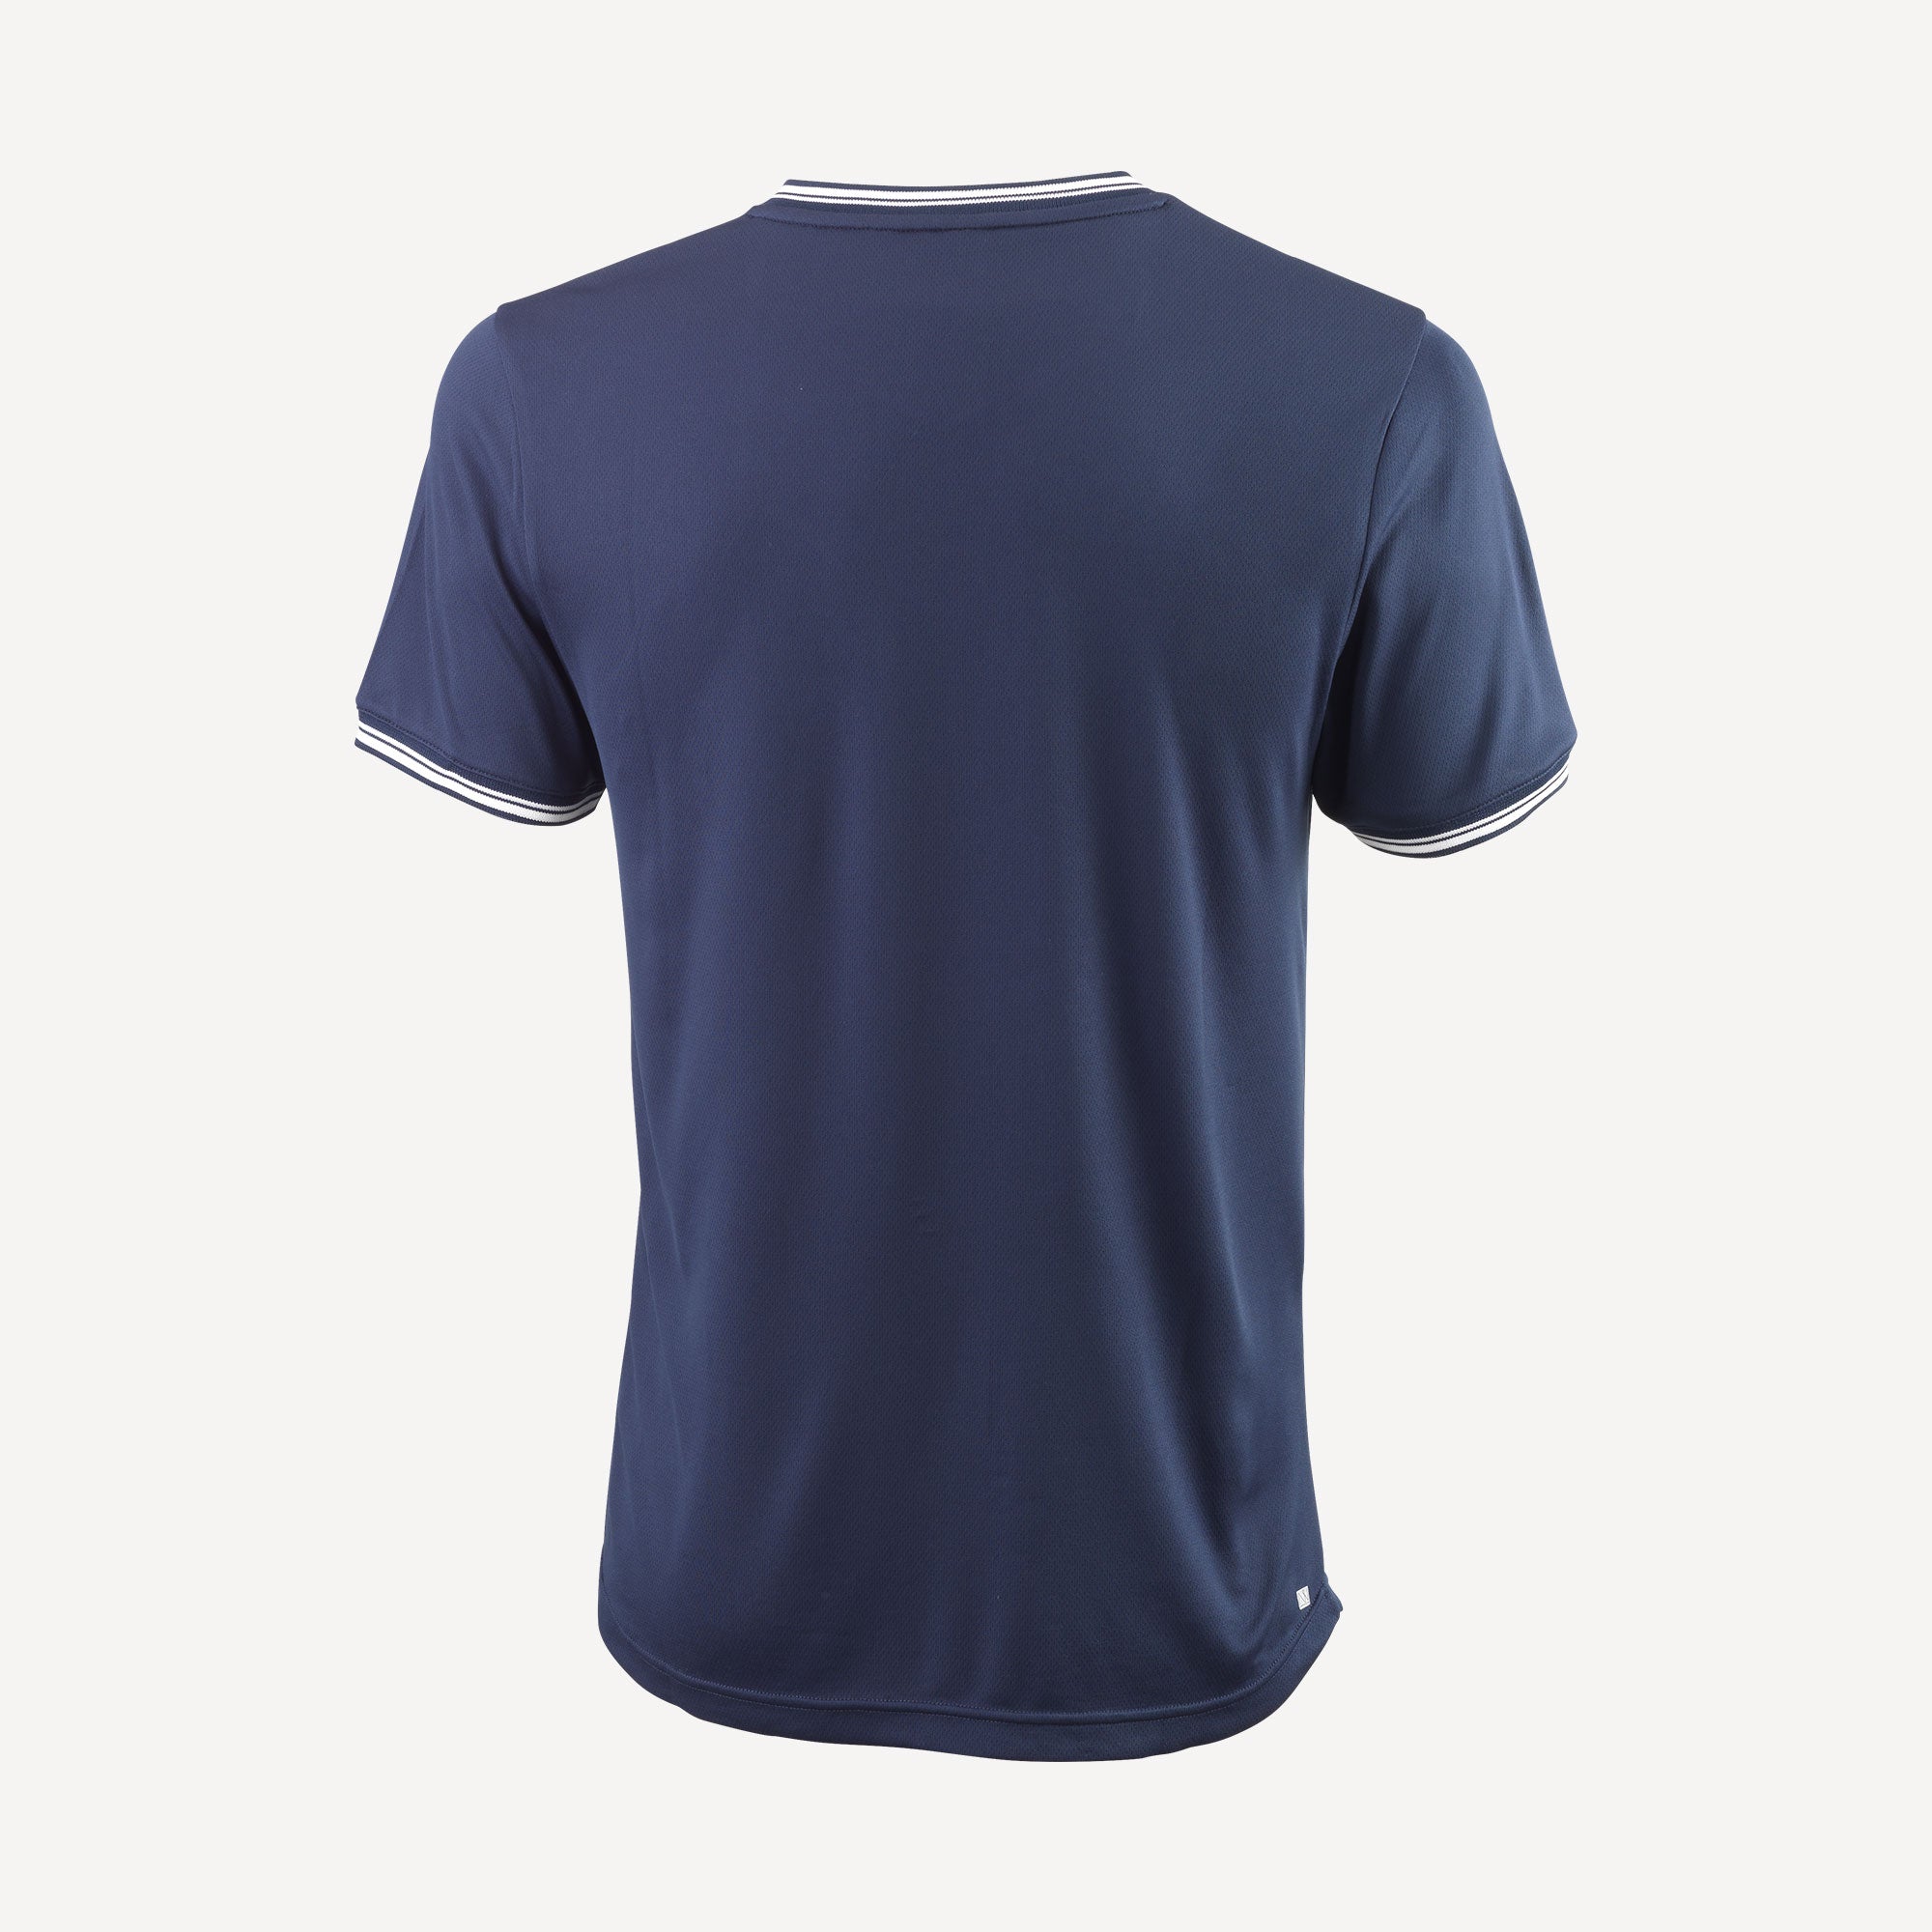 Wilson Team 2 Men's V-Neck Tennis Shirt Blue (2)